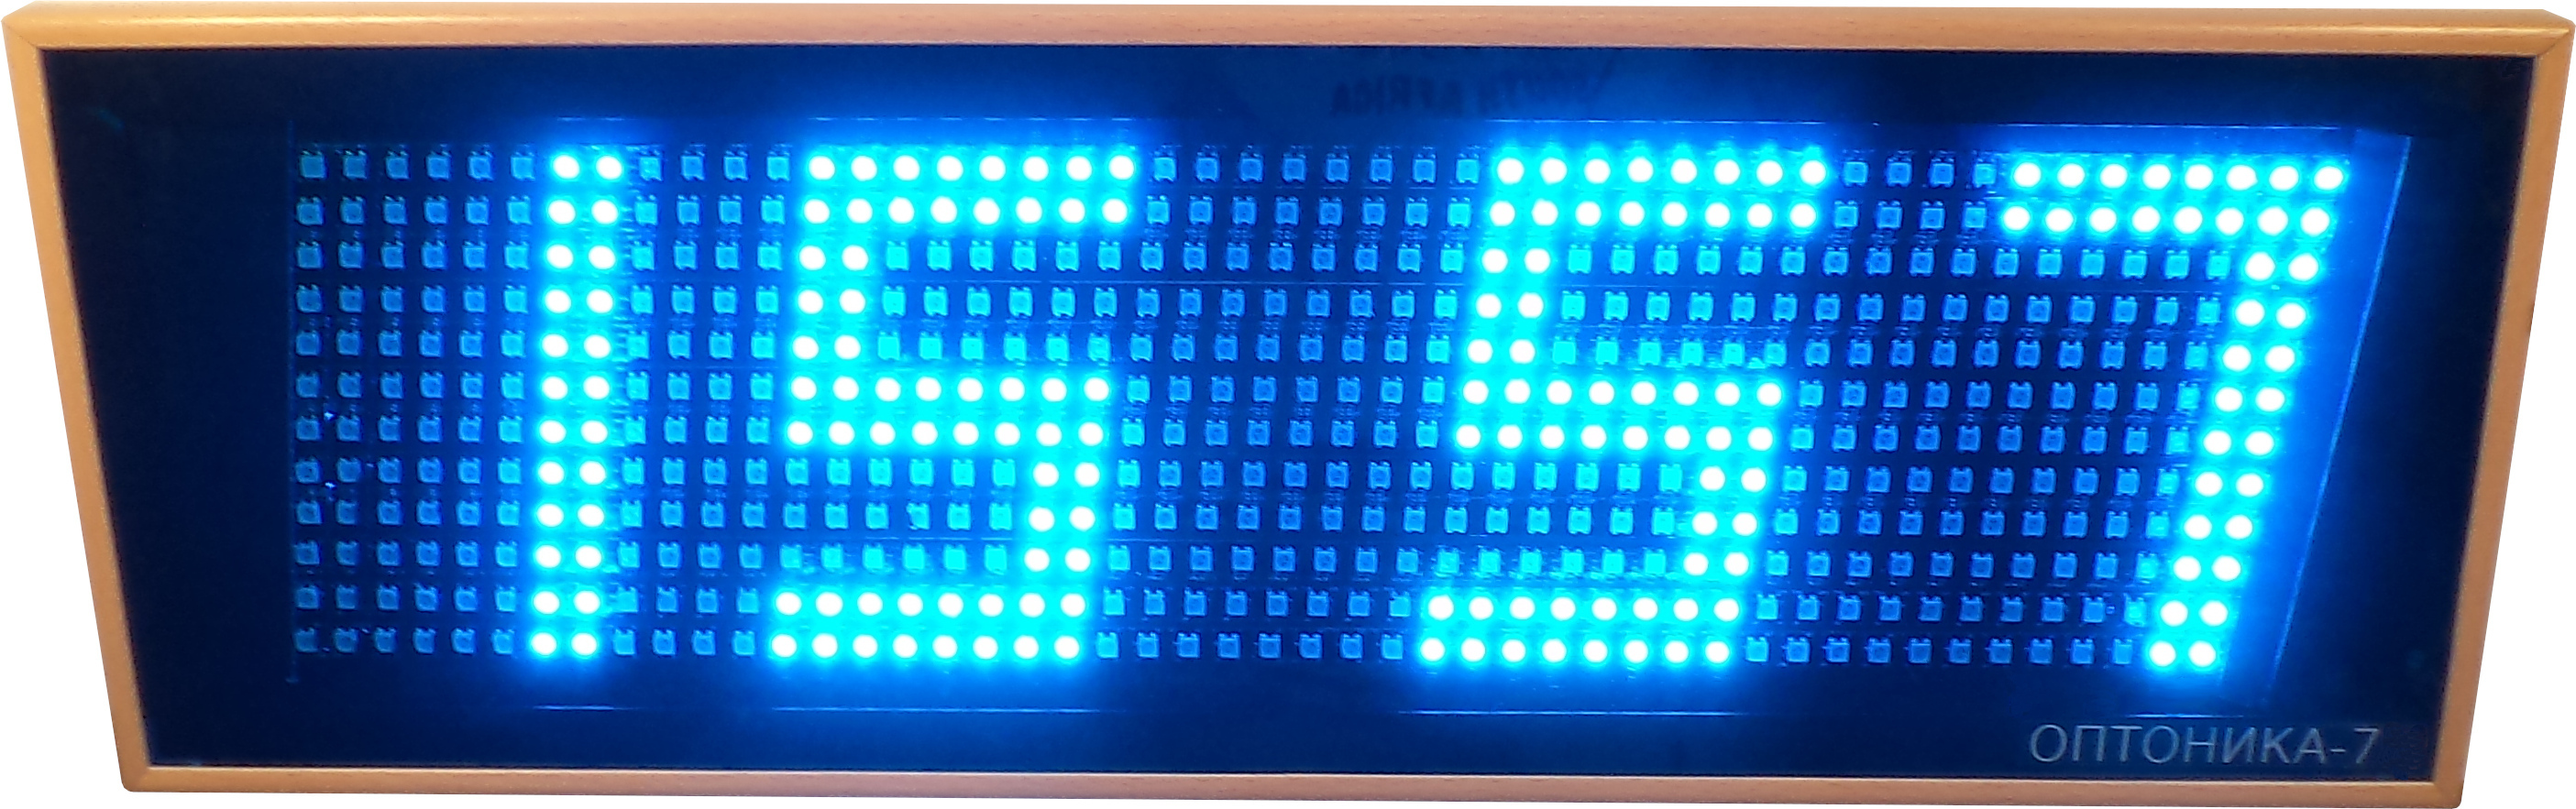 Optonika-7 LED clock